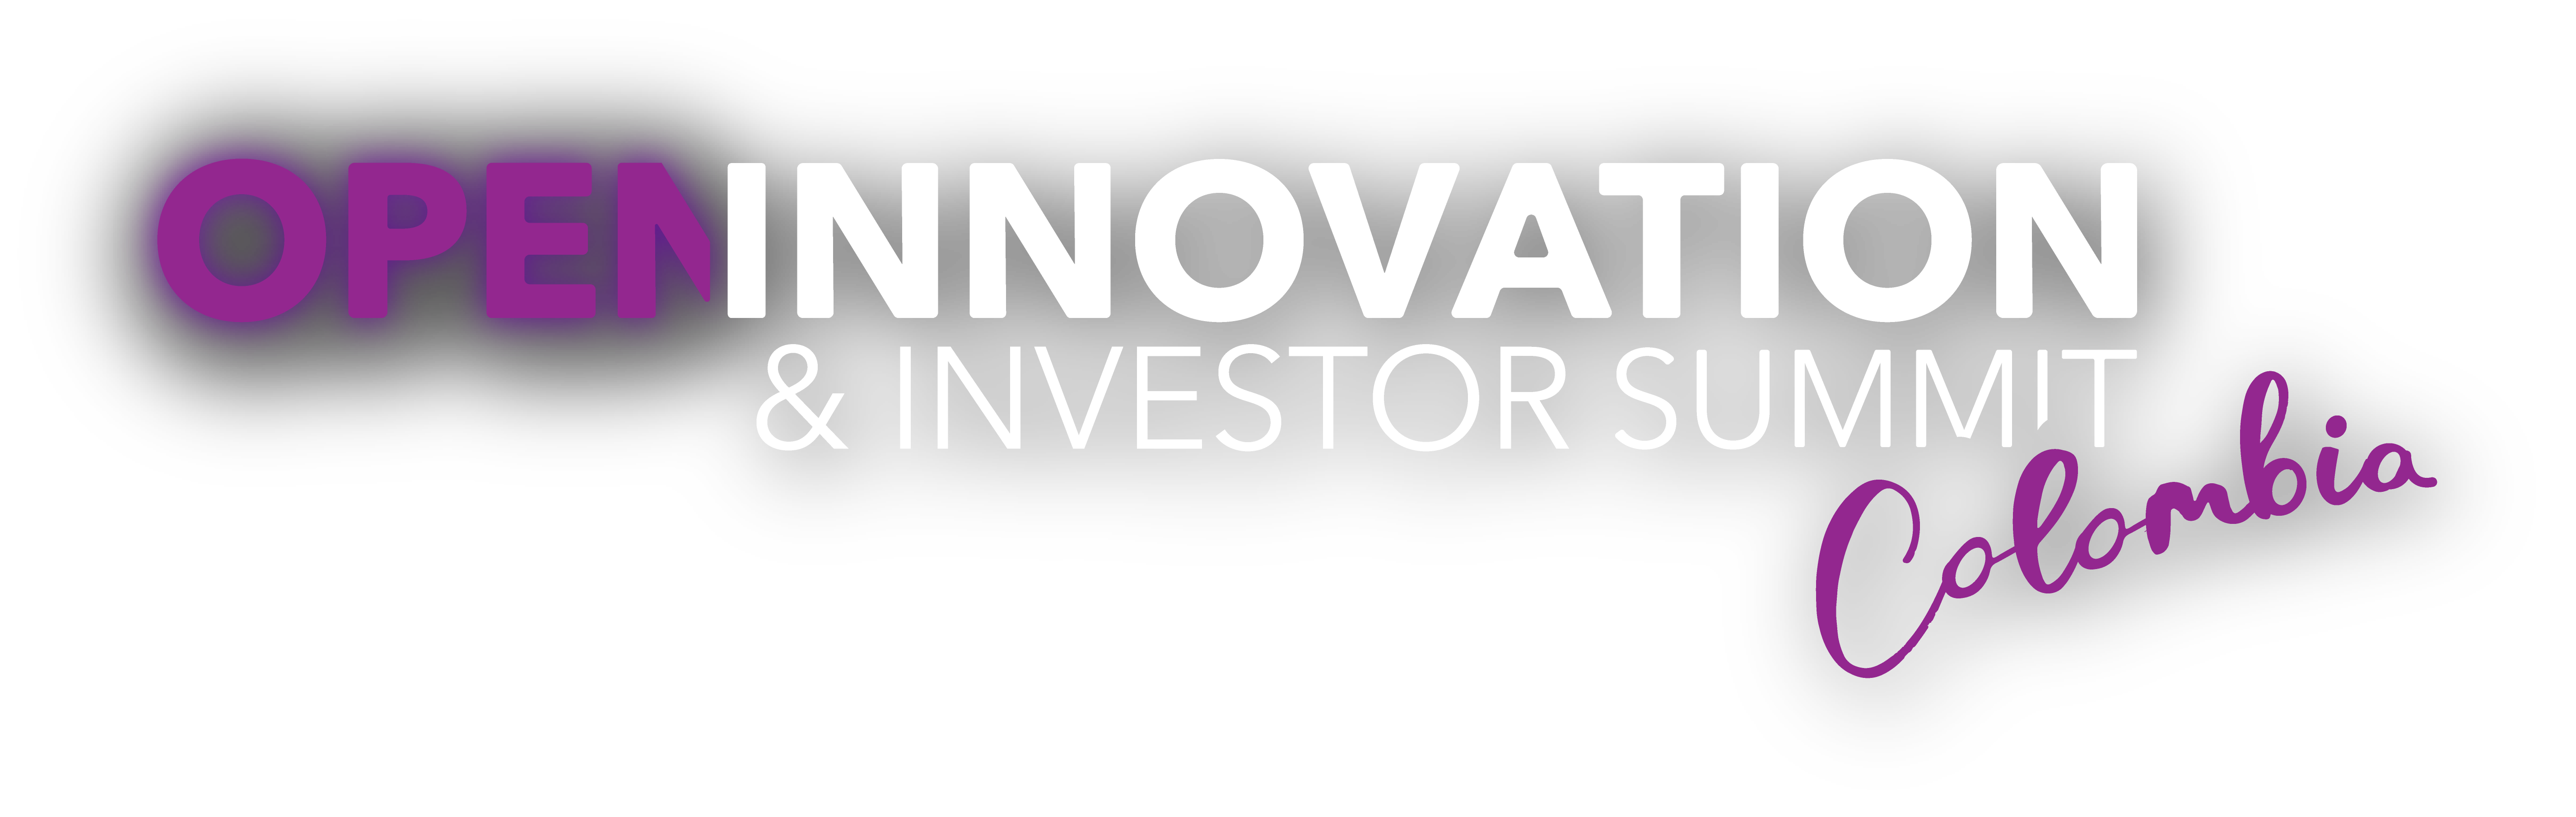 Open Innovation & Investor Summit Colombia